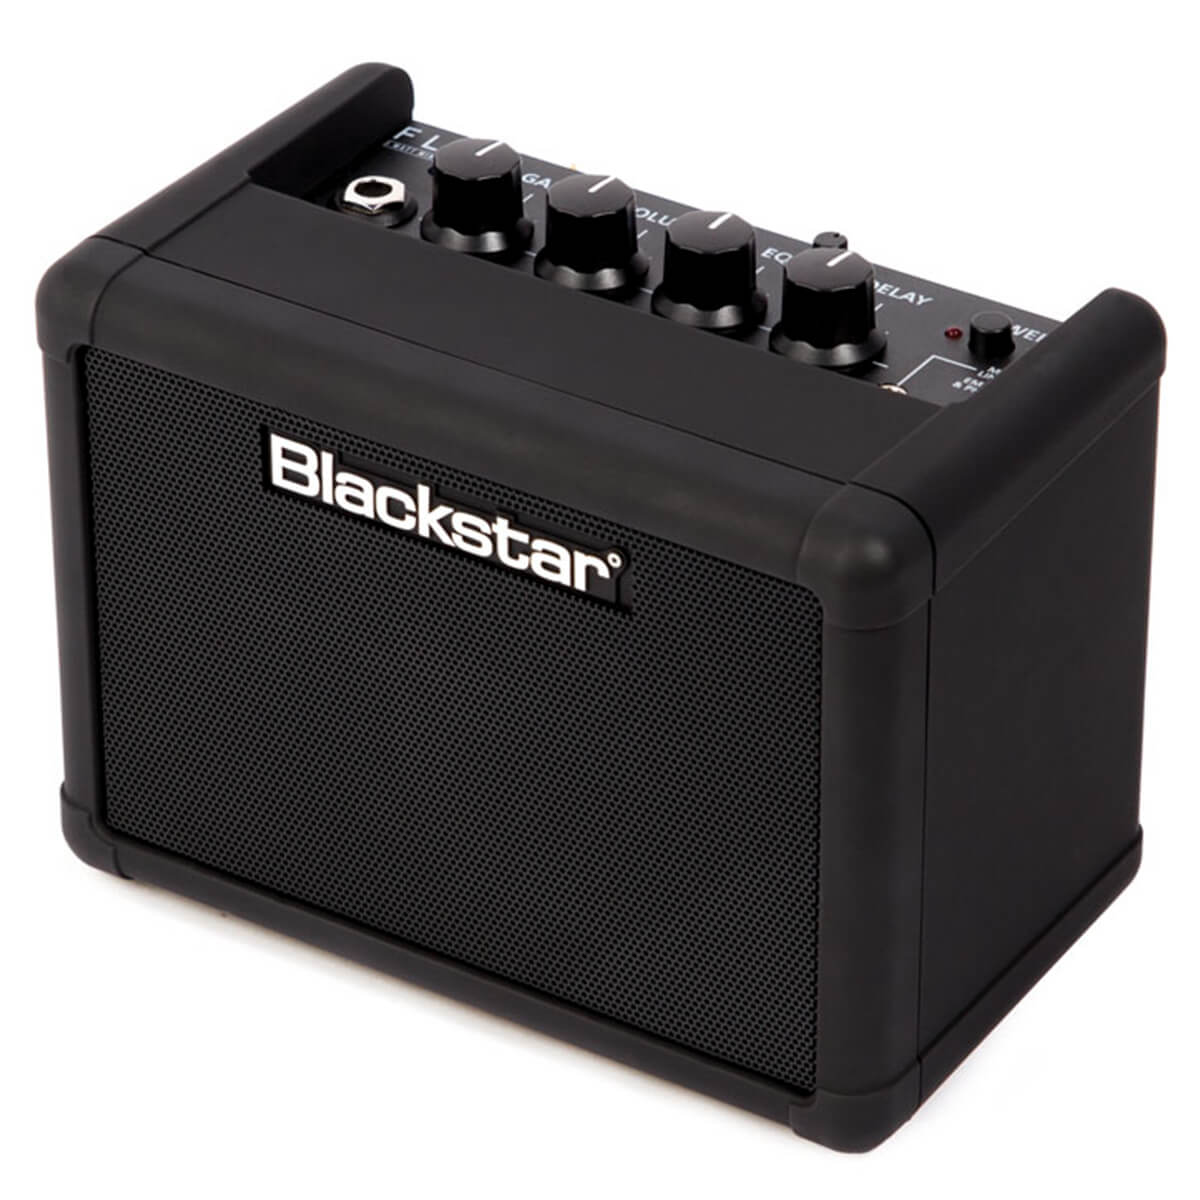 Blackstar Amps FLY 3 Bluetooth mini guitar amplifier left